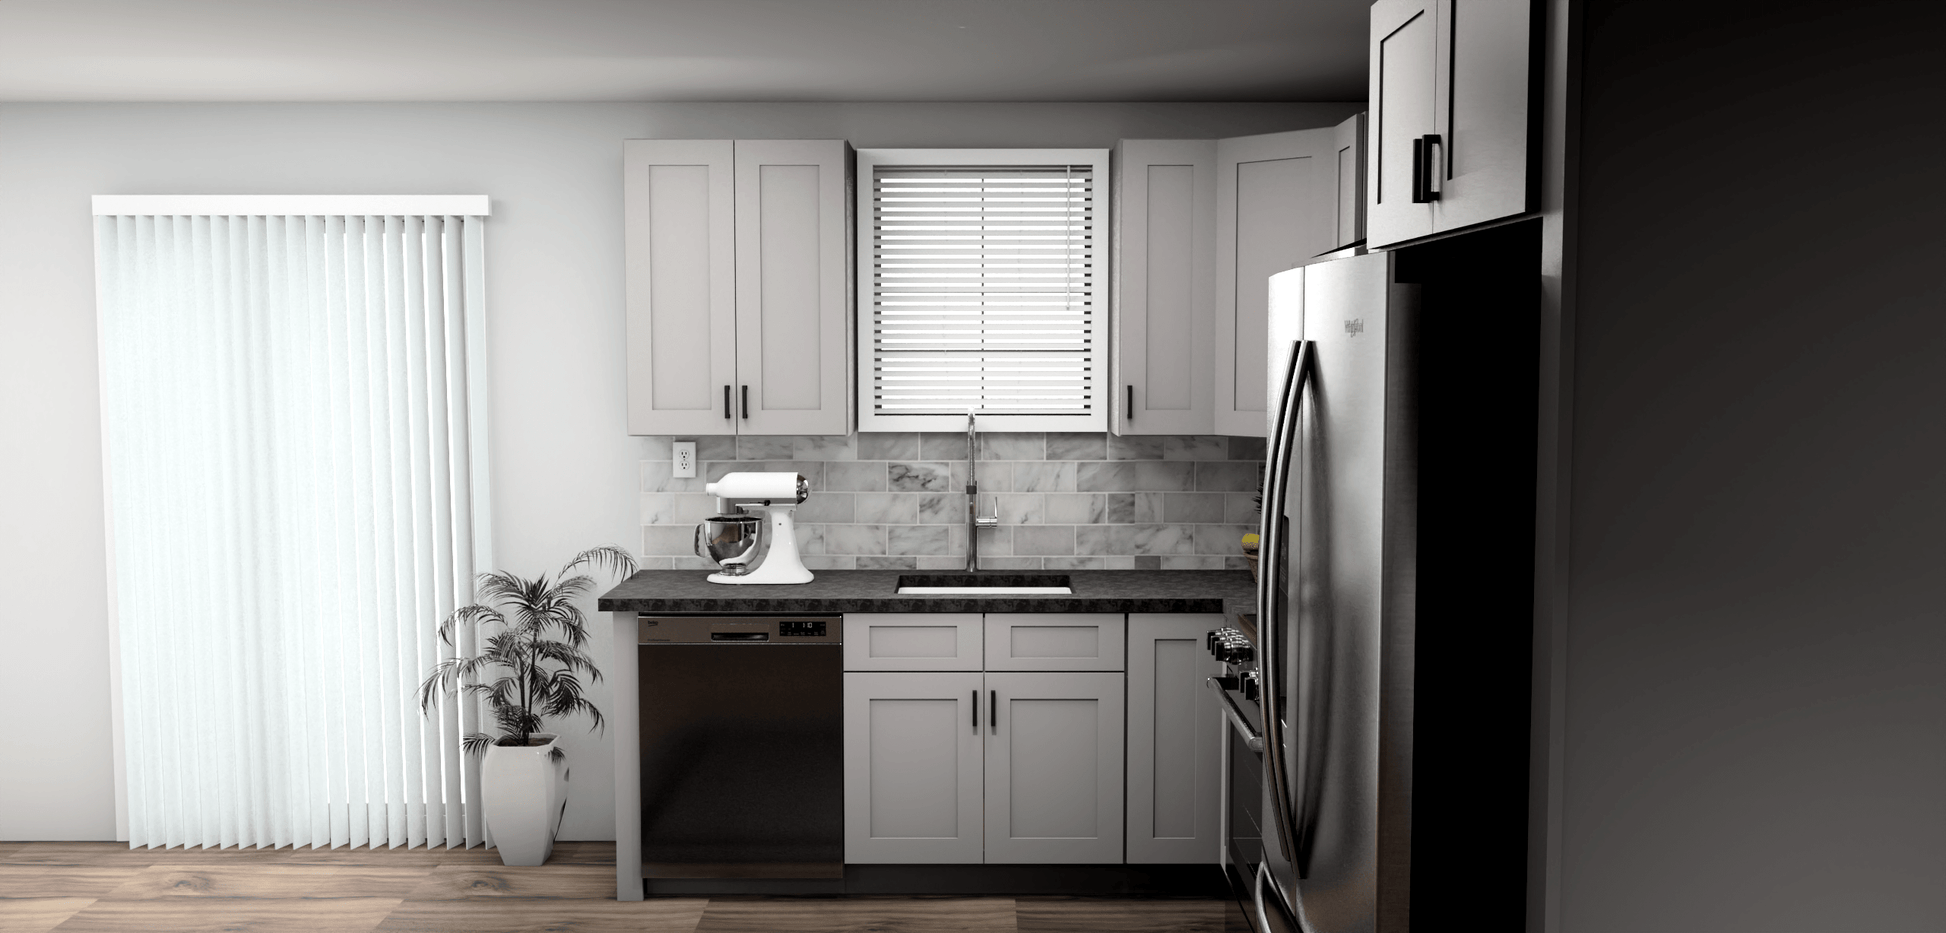 Fabuwood Allure Galaxy Nickel 8 x 11 L Shaped Kitchen Side Layout Photo